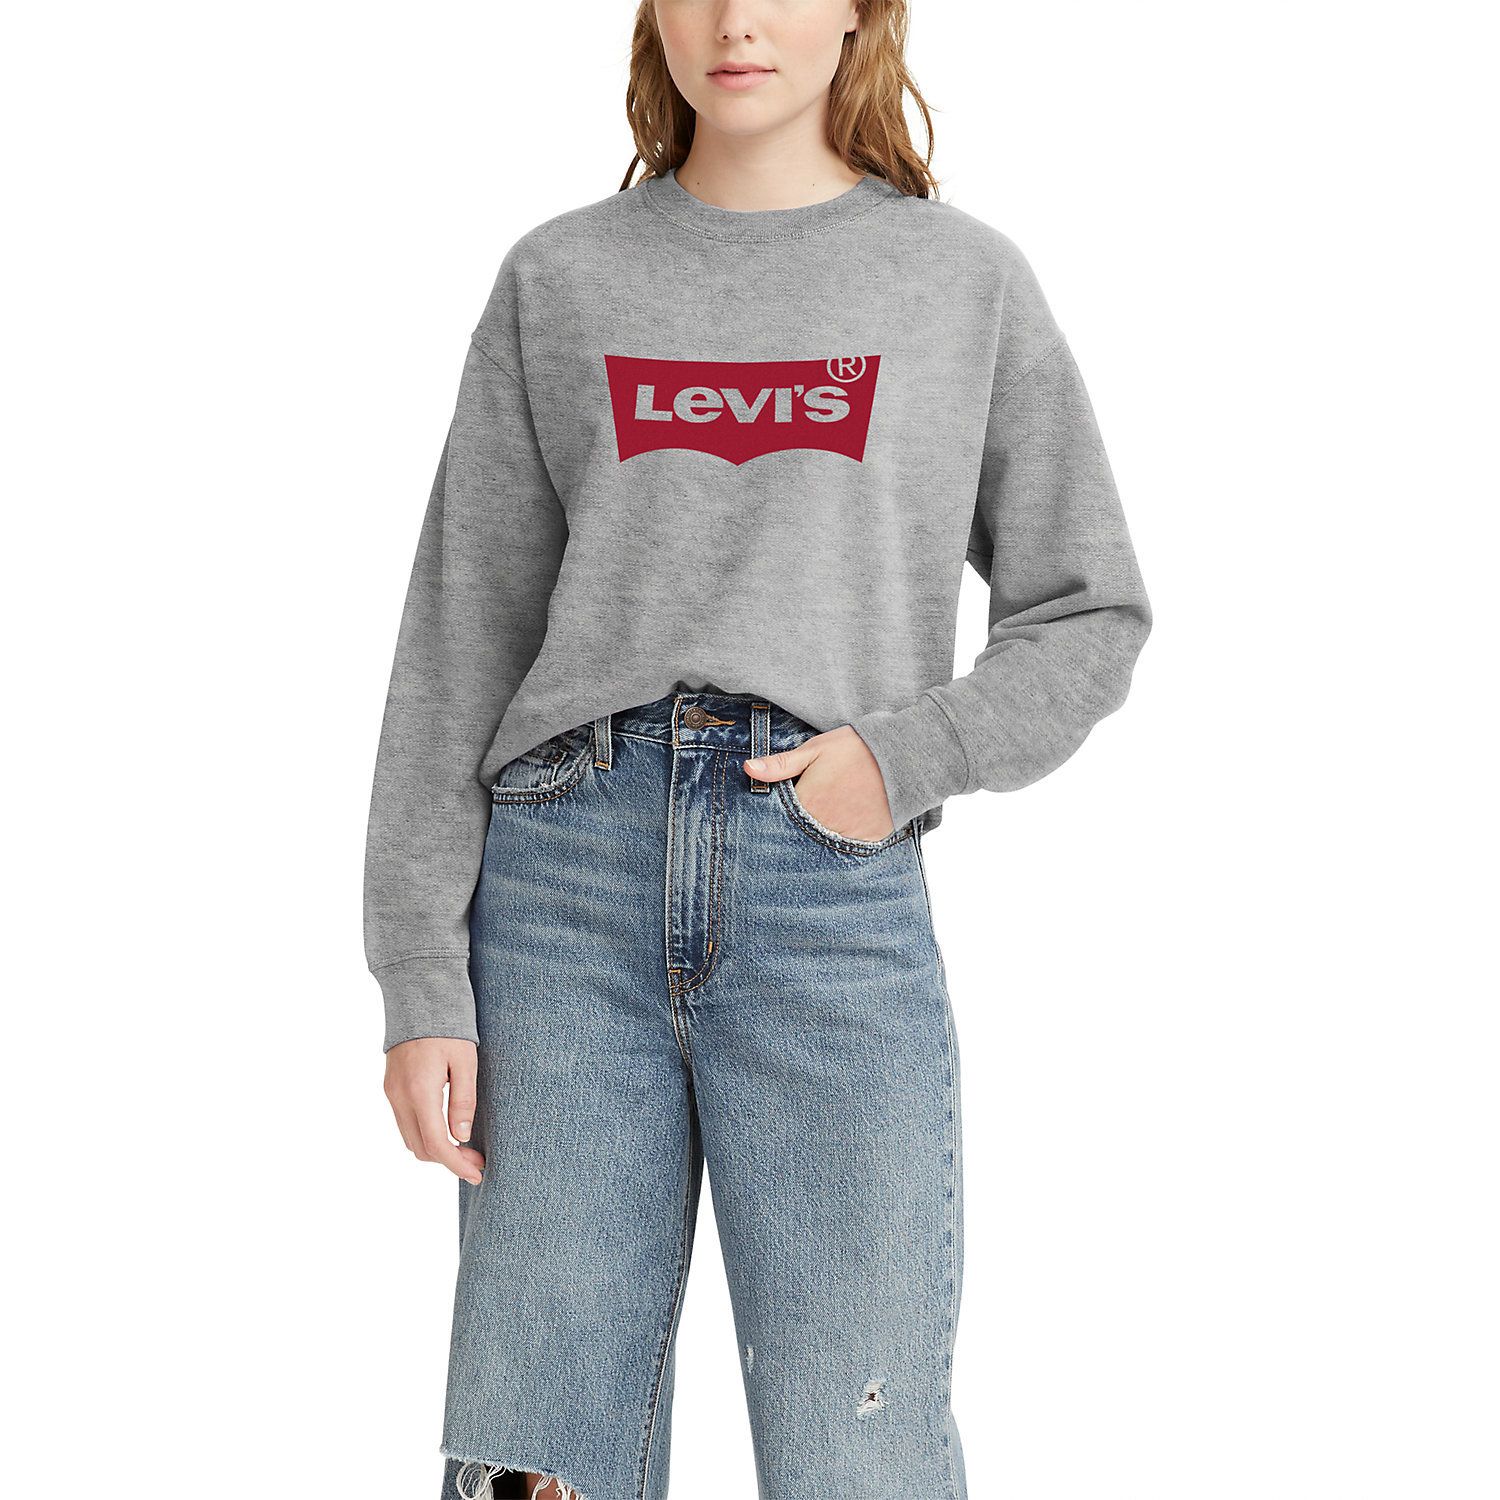 Image for Levi's Women's Crewneck Sweatshirt at Kohl's.